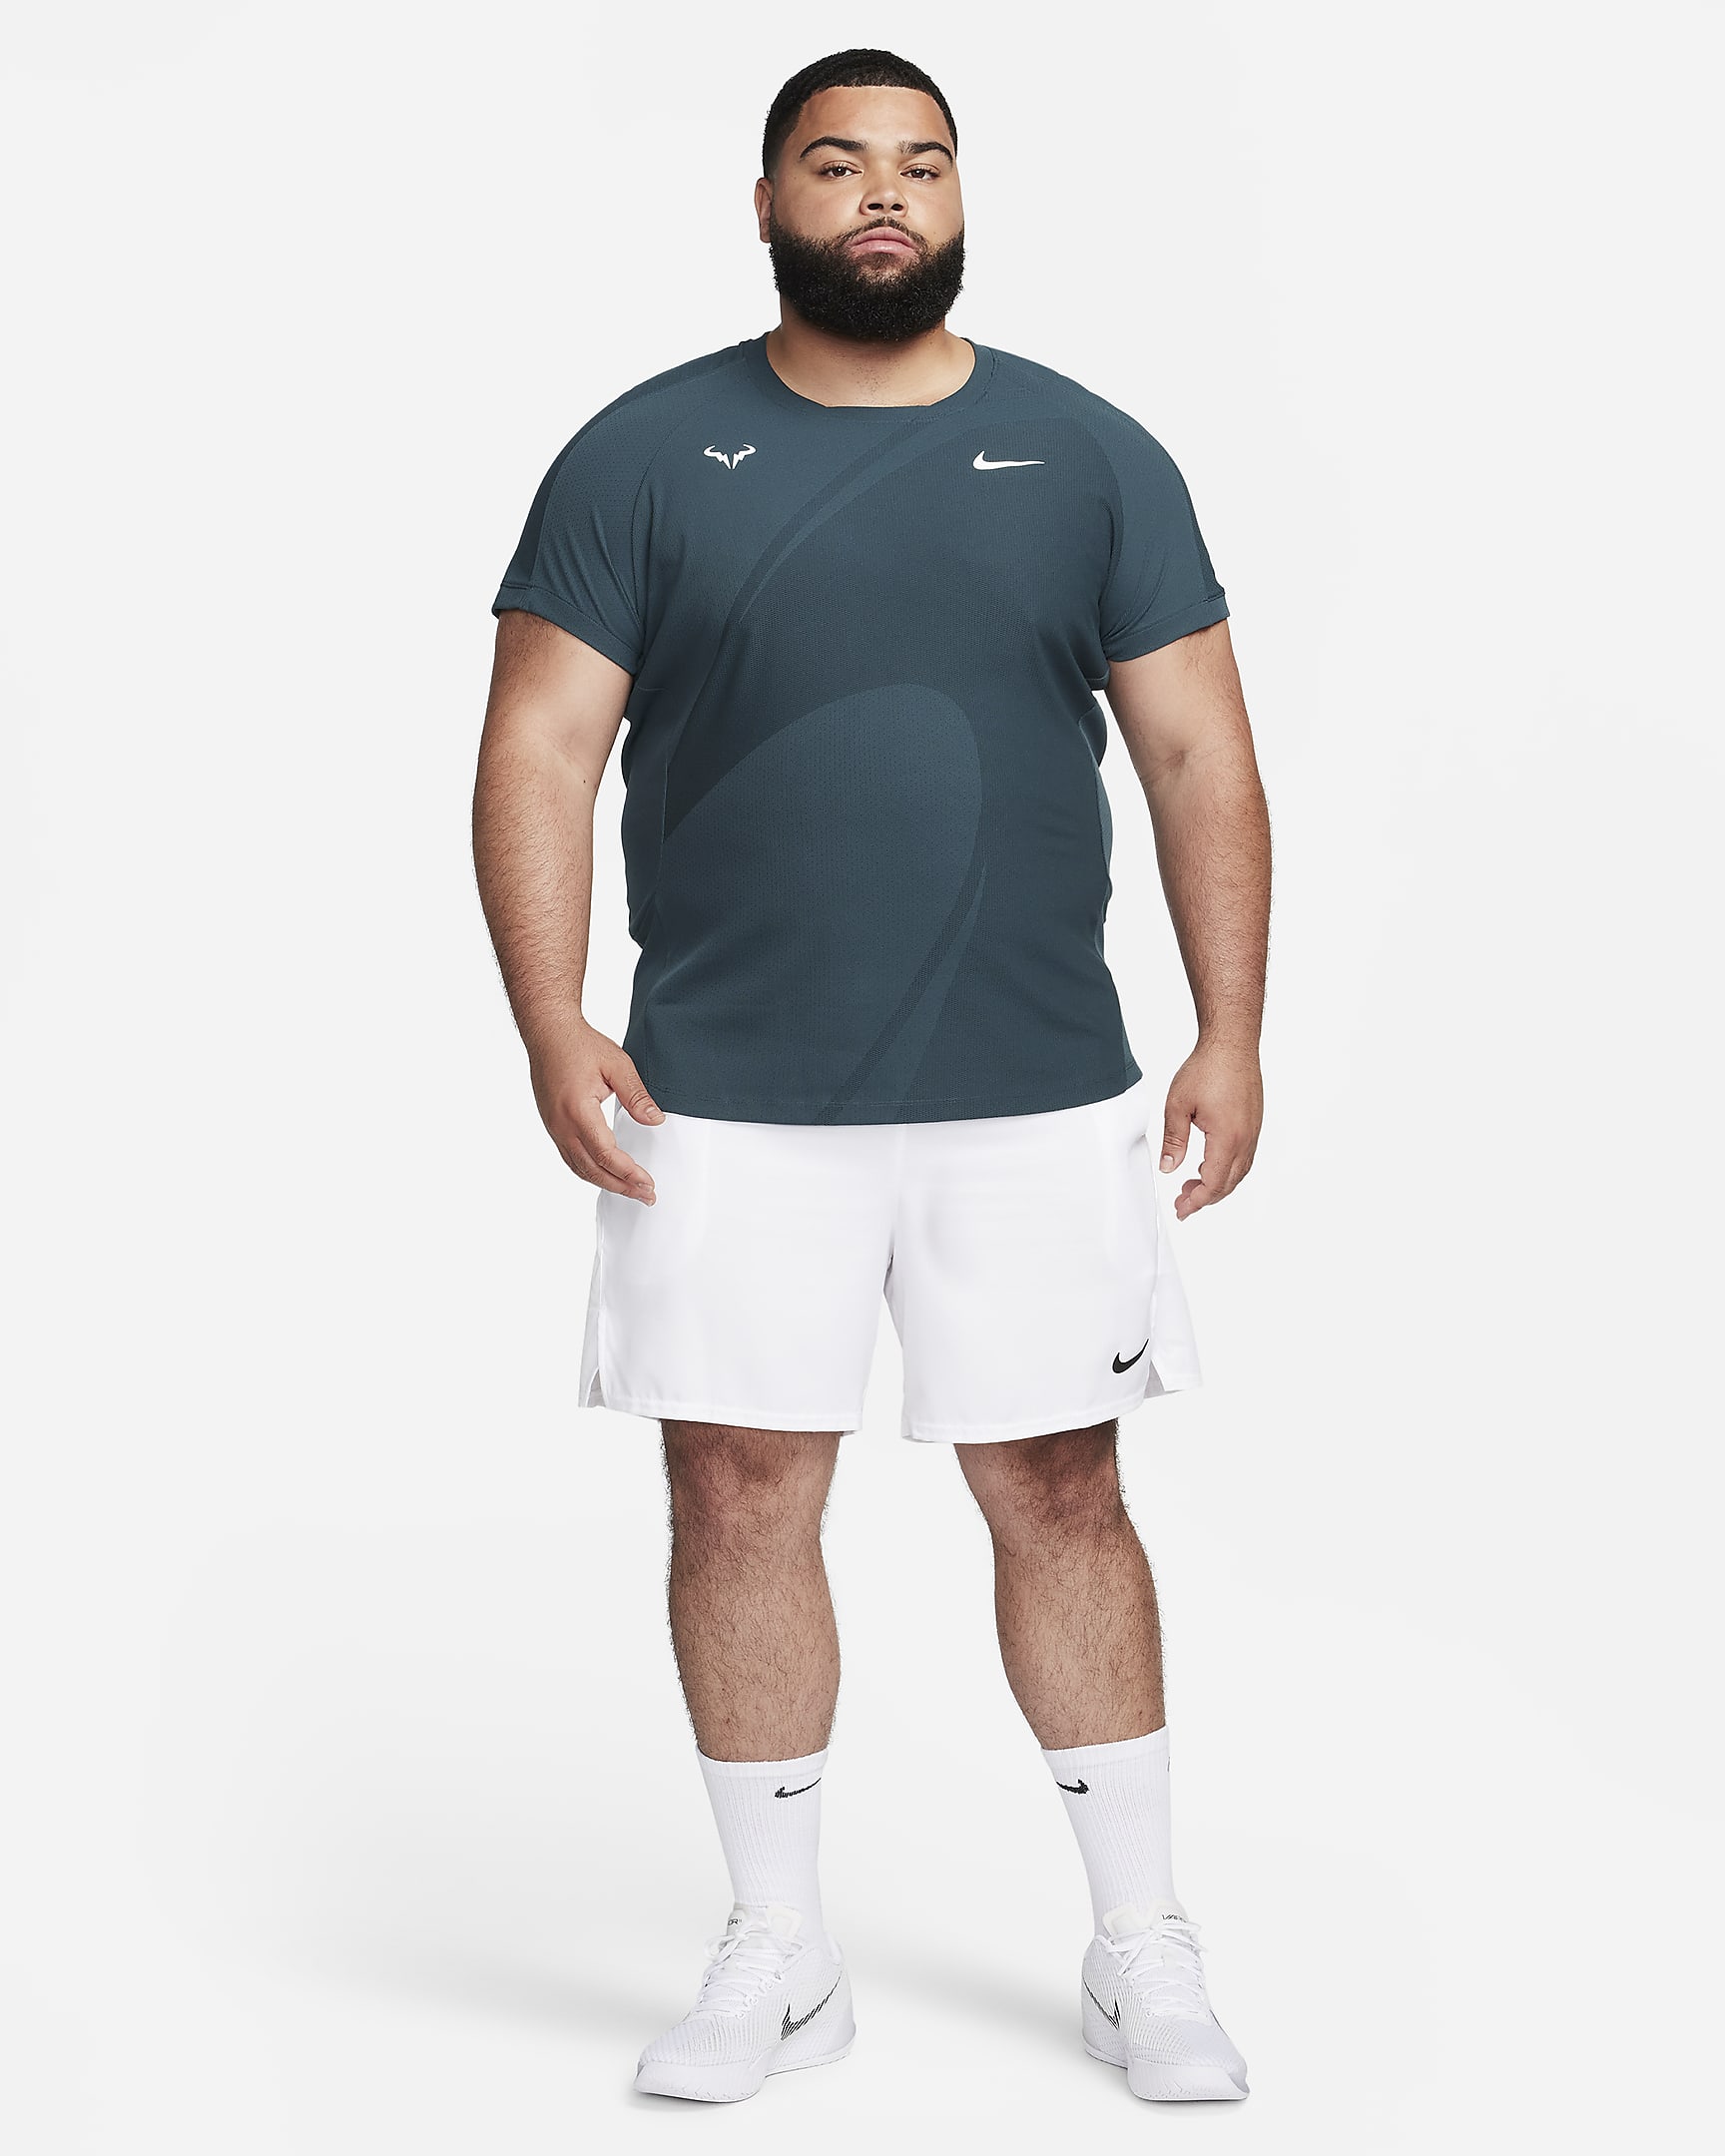 Rafa Men's Nike Dri-FIT ADV Short-Sleeve Tennis Top. Nike UK